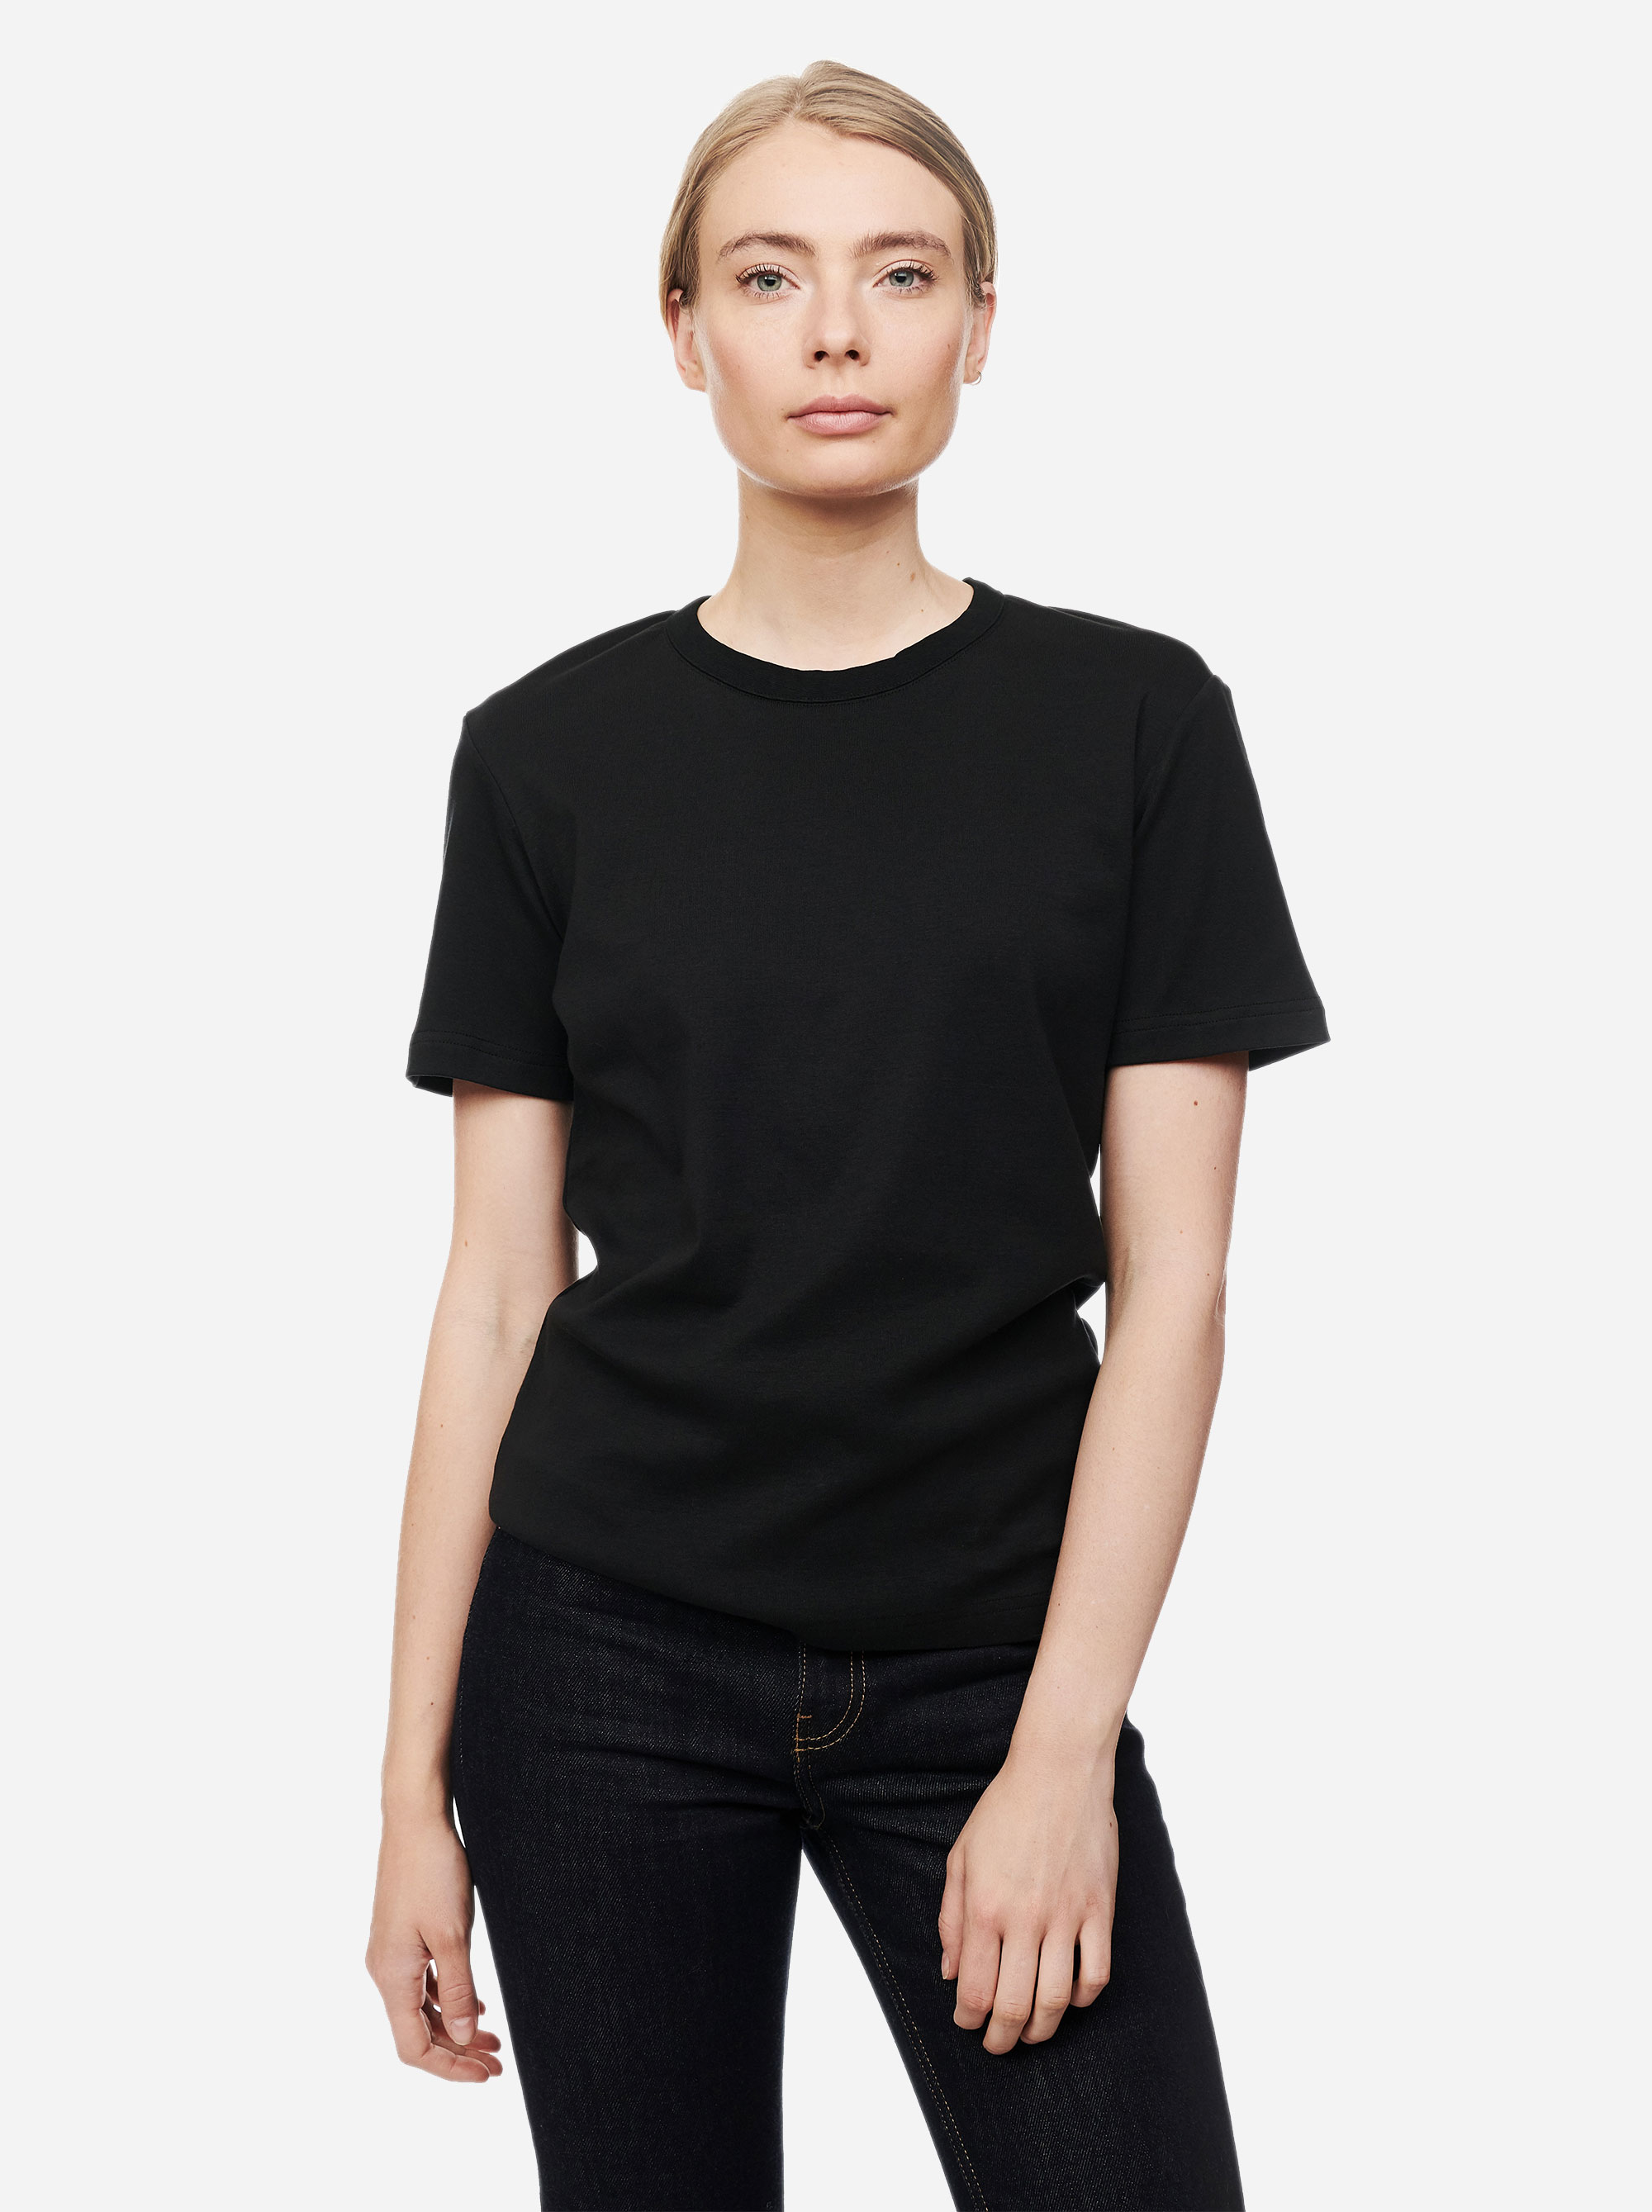 Teym - The T-Shirt - Women - Black1